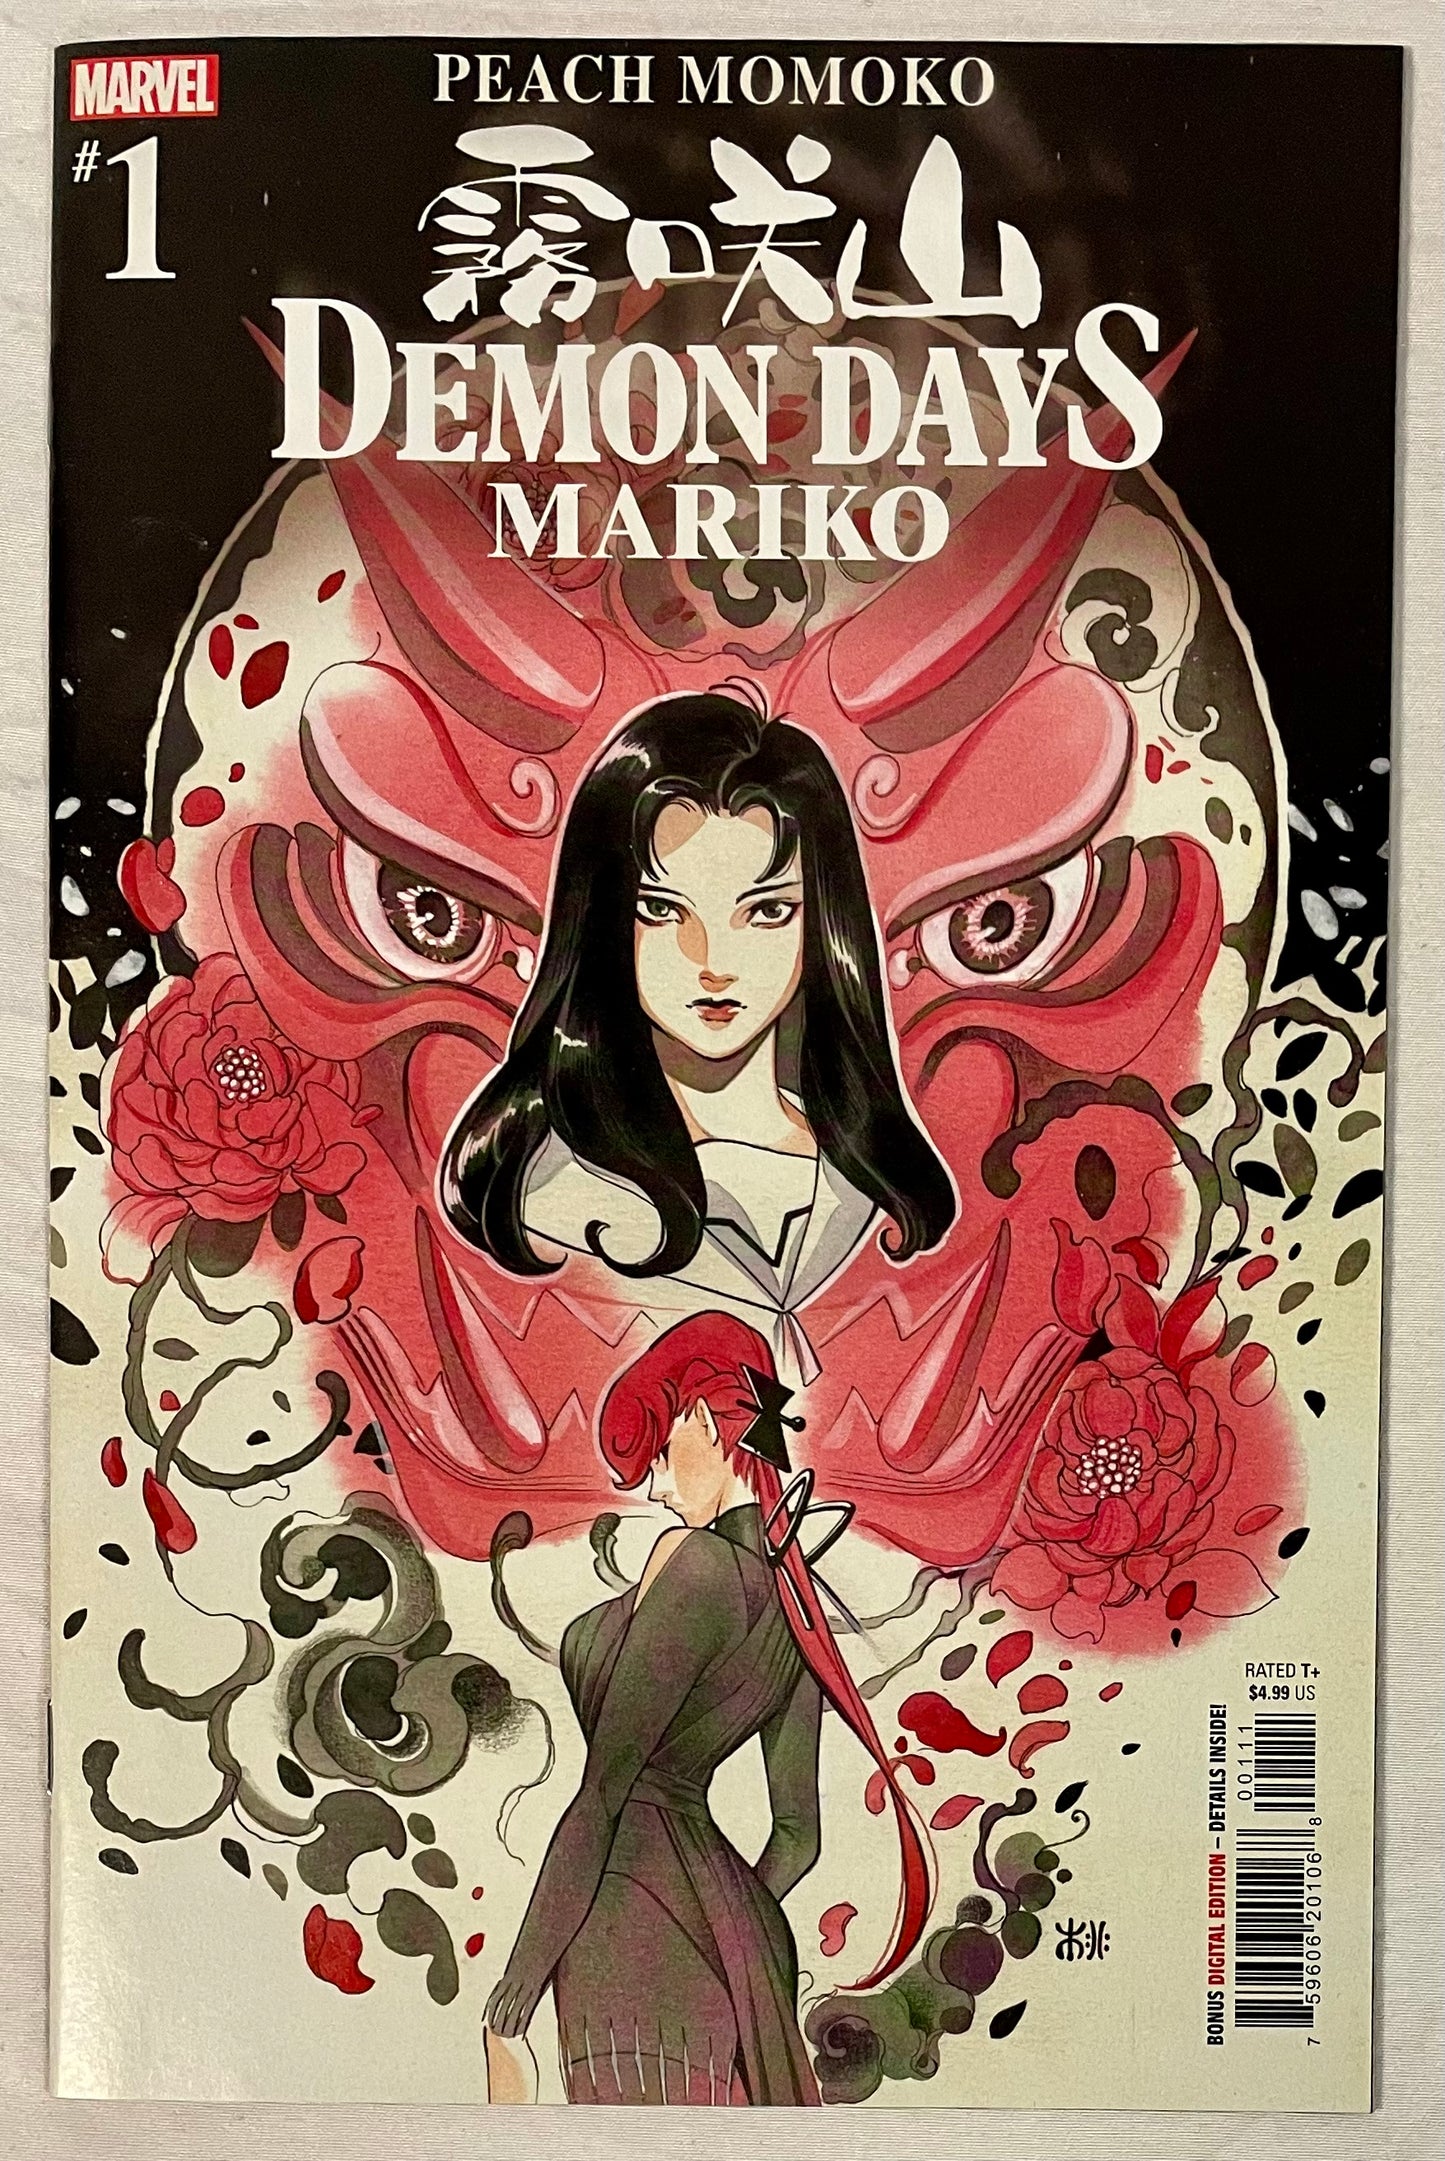 Marvel Comics Demon Days Mariko #1 (Peach Momoko)